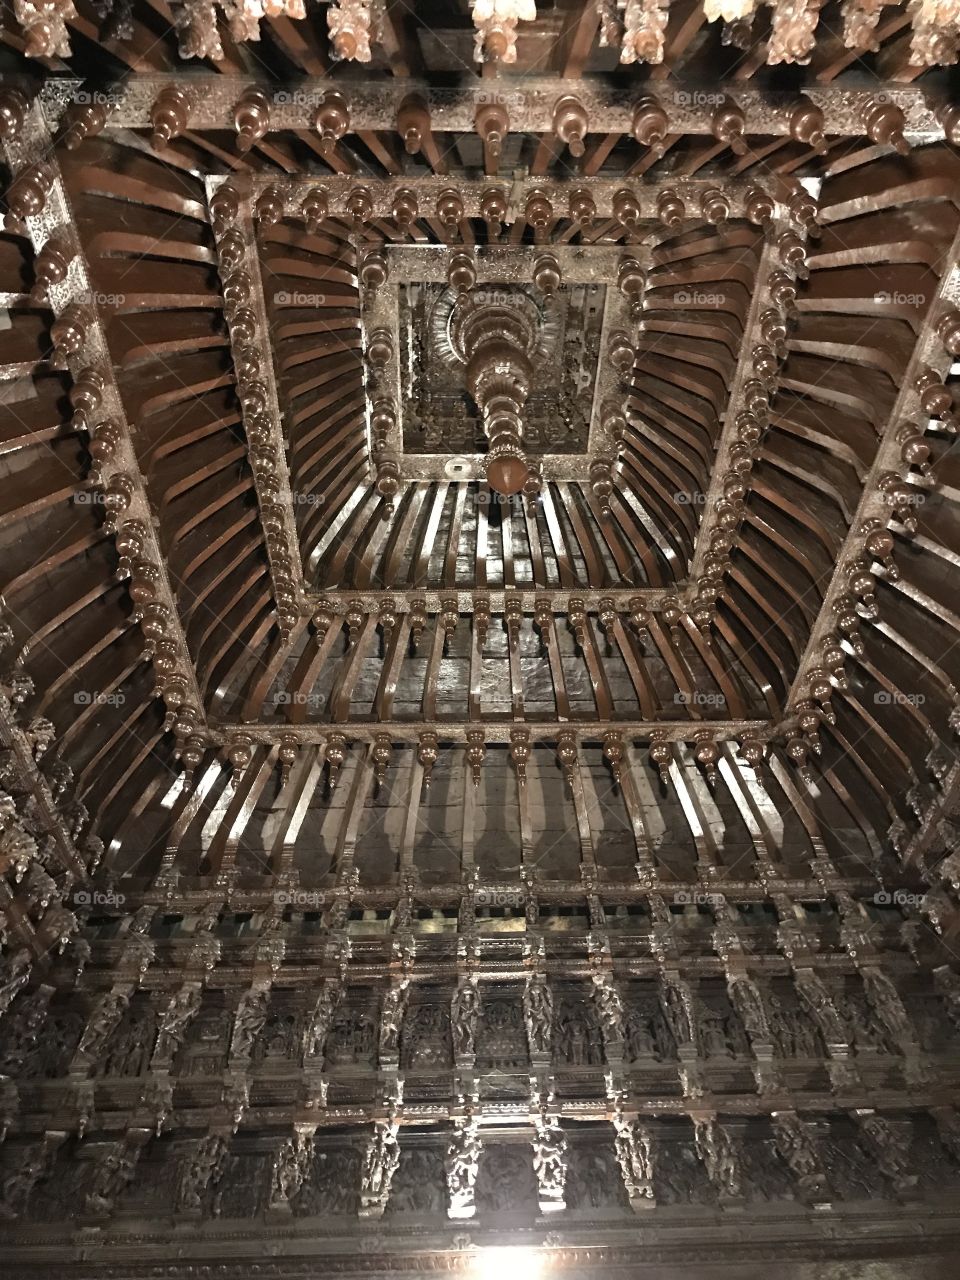 Wonderful Ceiling Architecture 